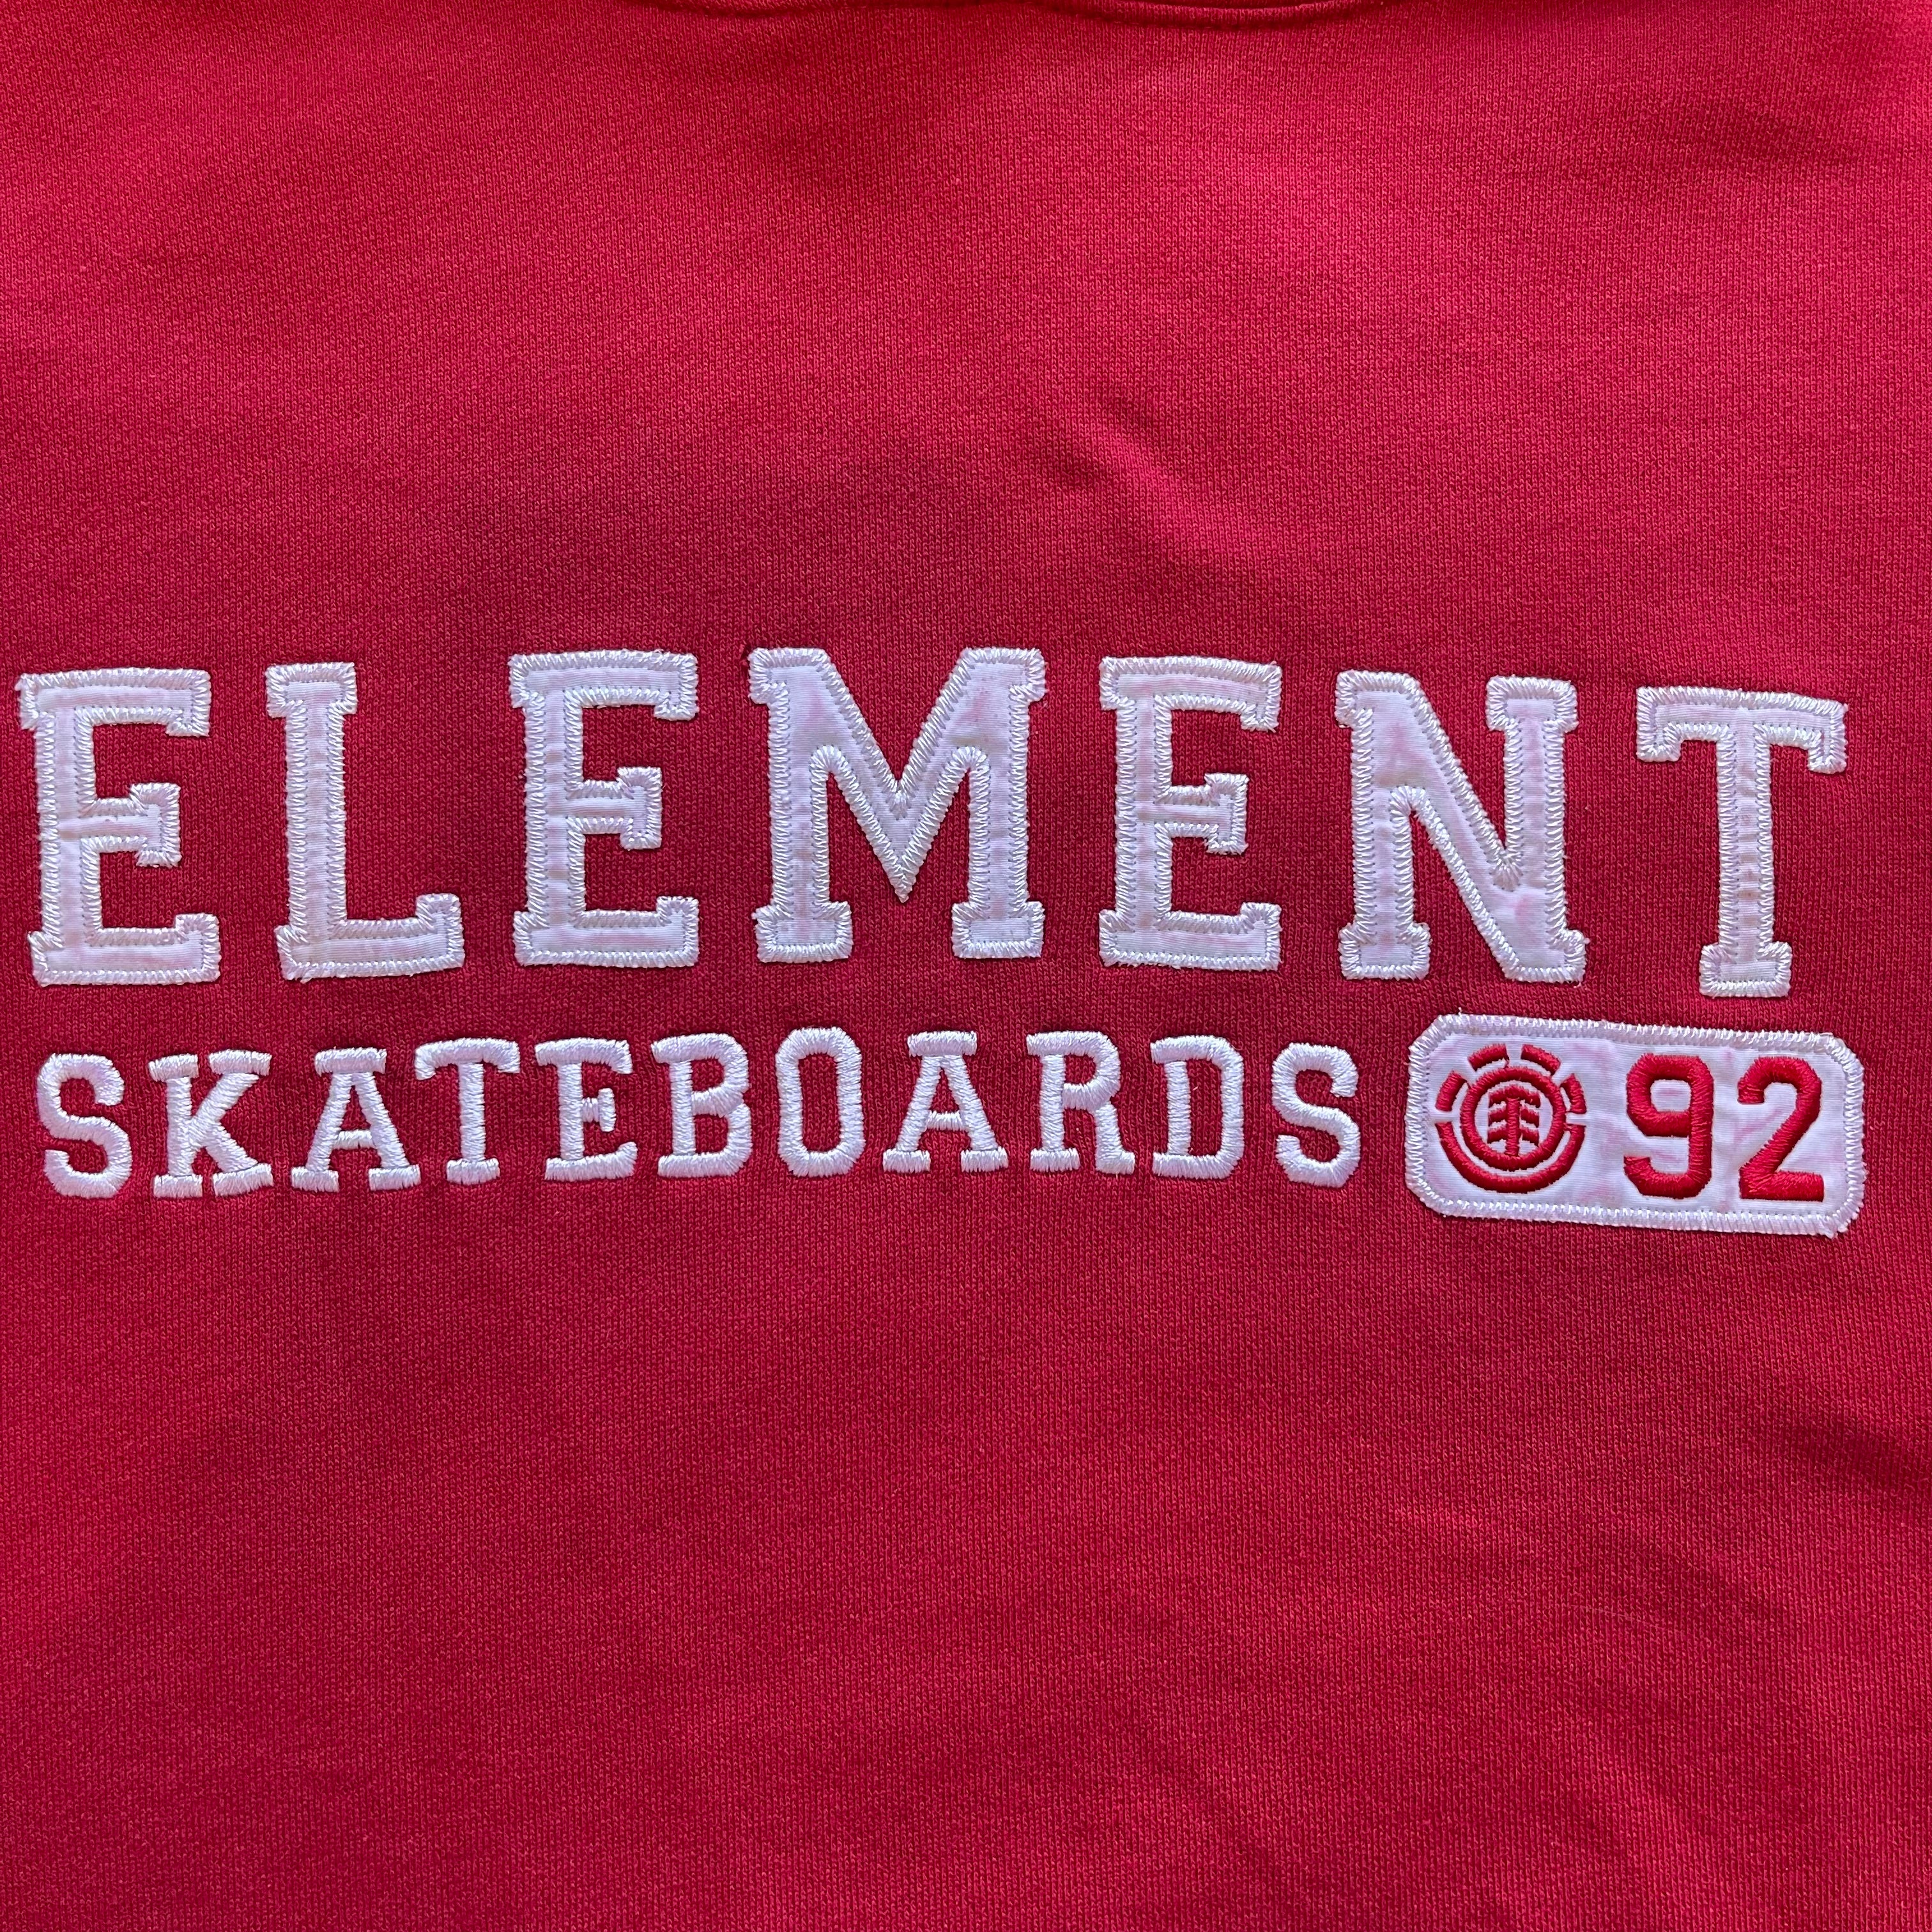 Element Skateboards Red Hoodie